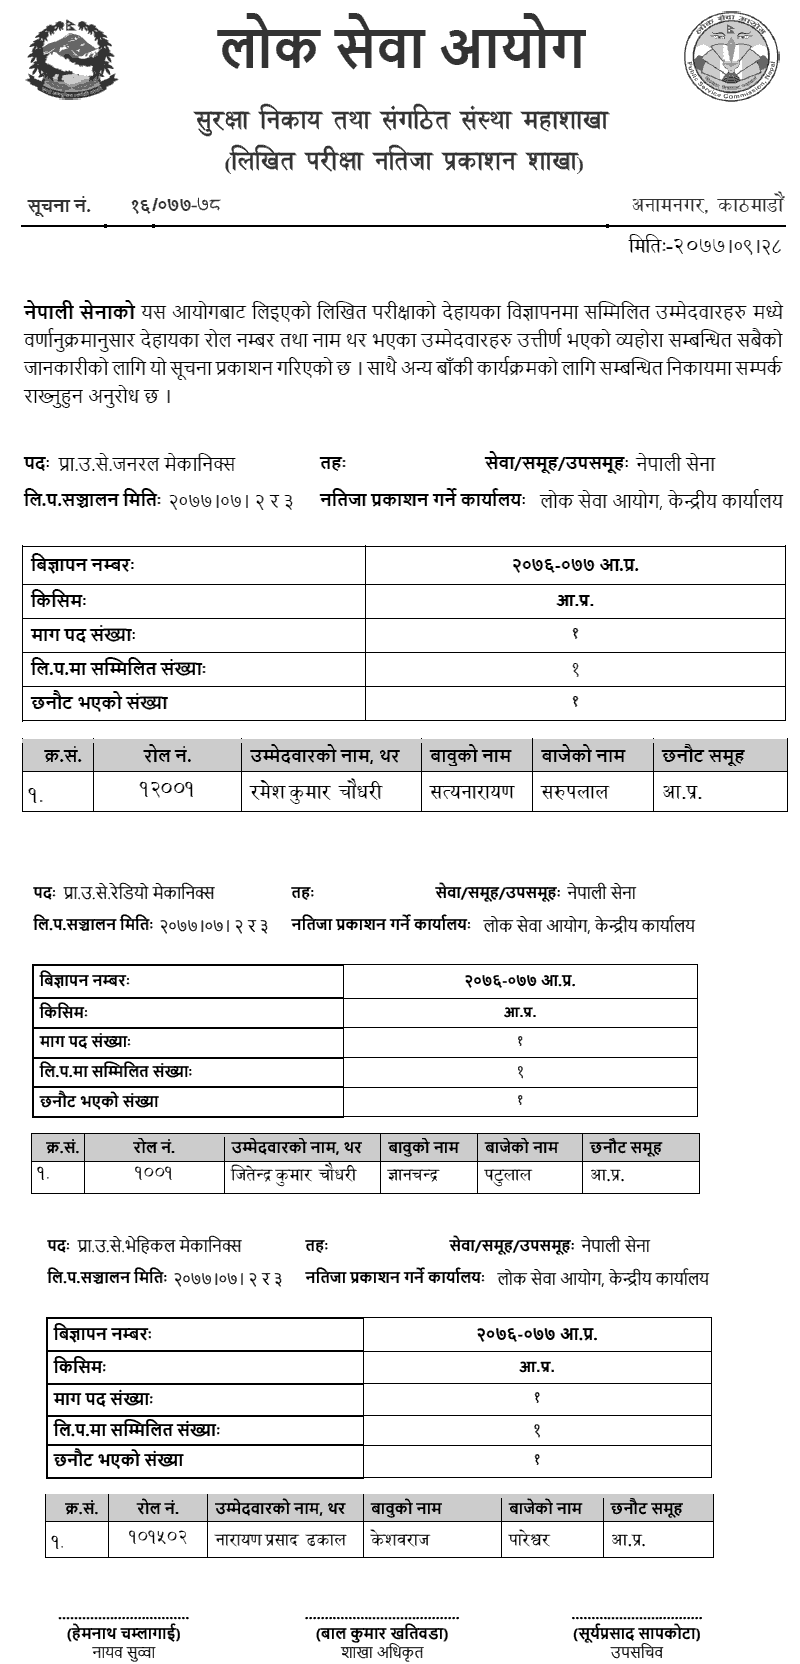 Nepal Army Prabidhik Upa Senani Written Exam Result